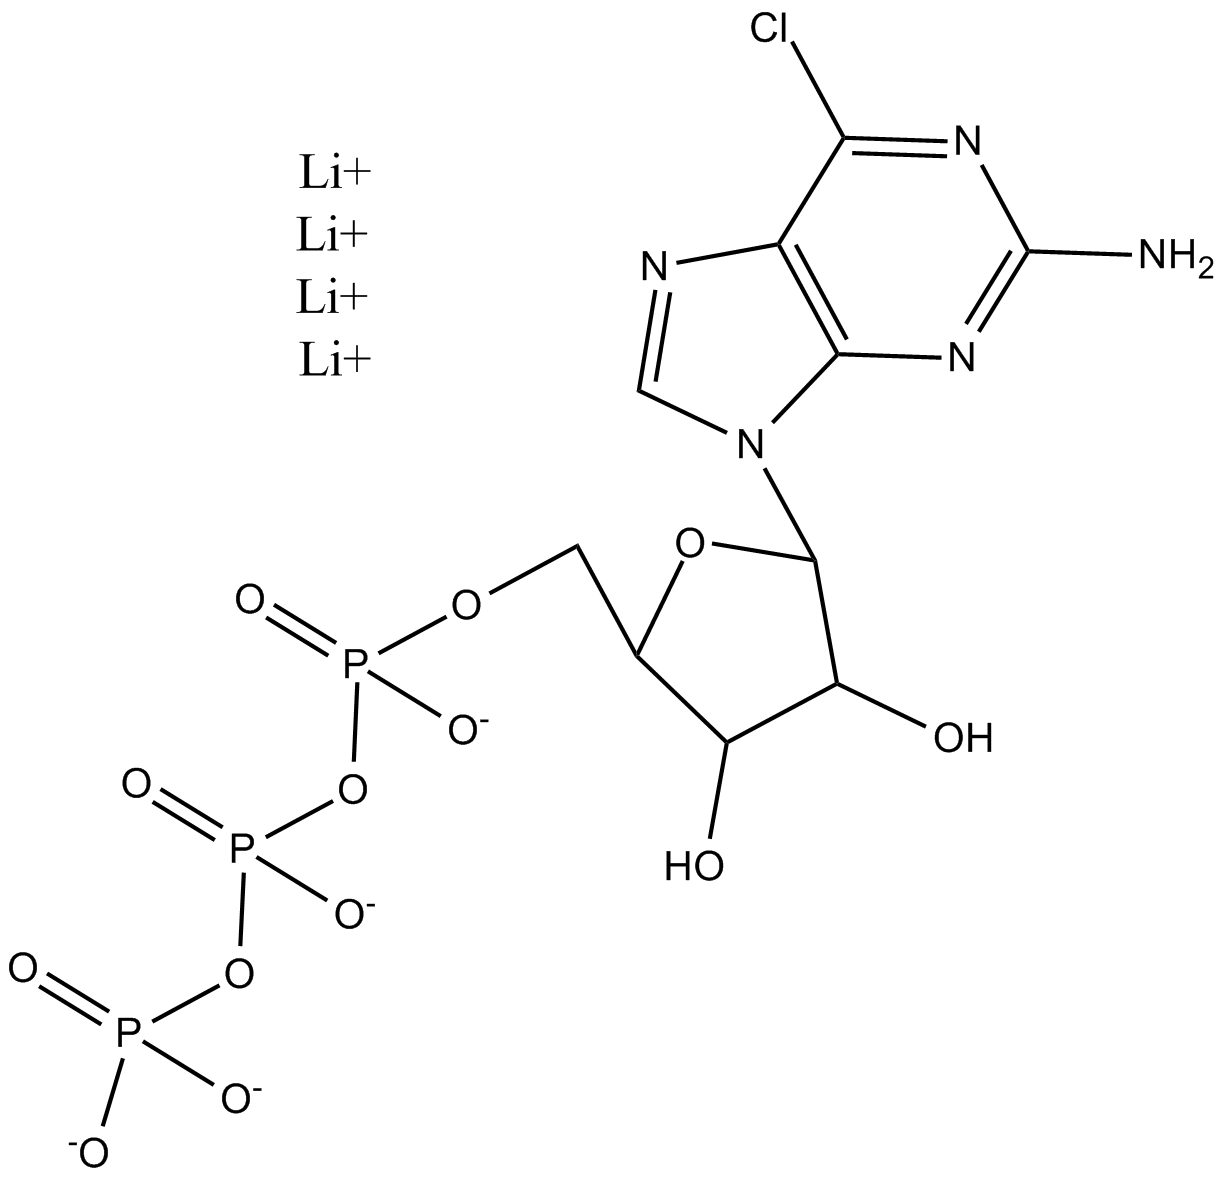 2-Amino-6-Cl-purine-rTP